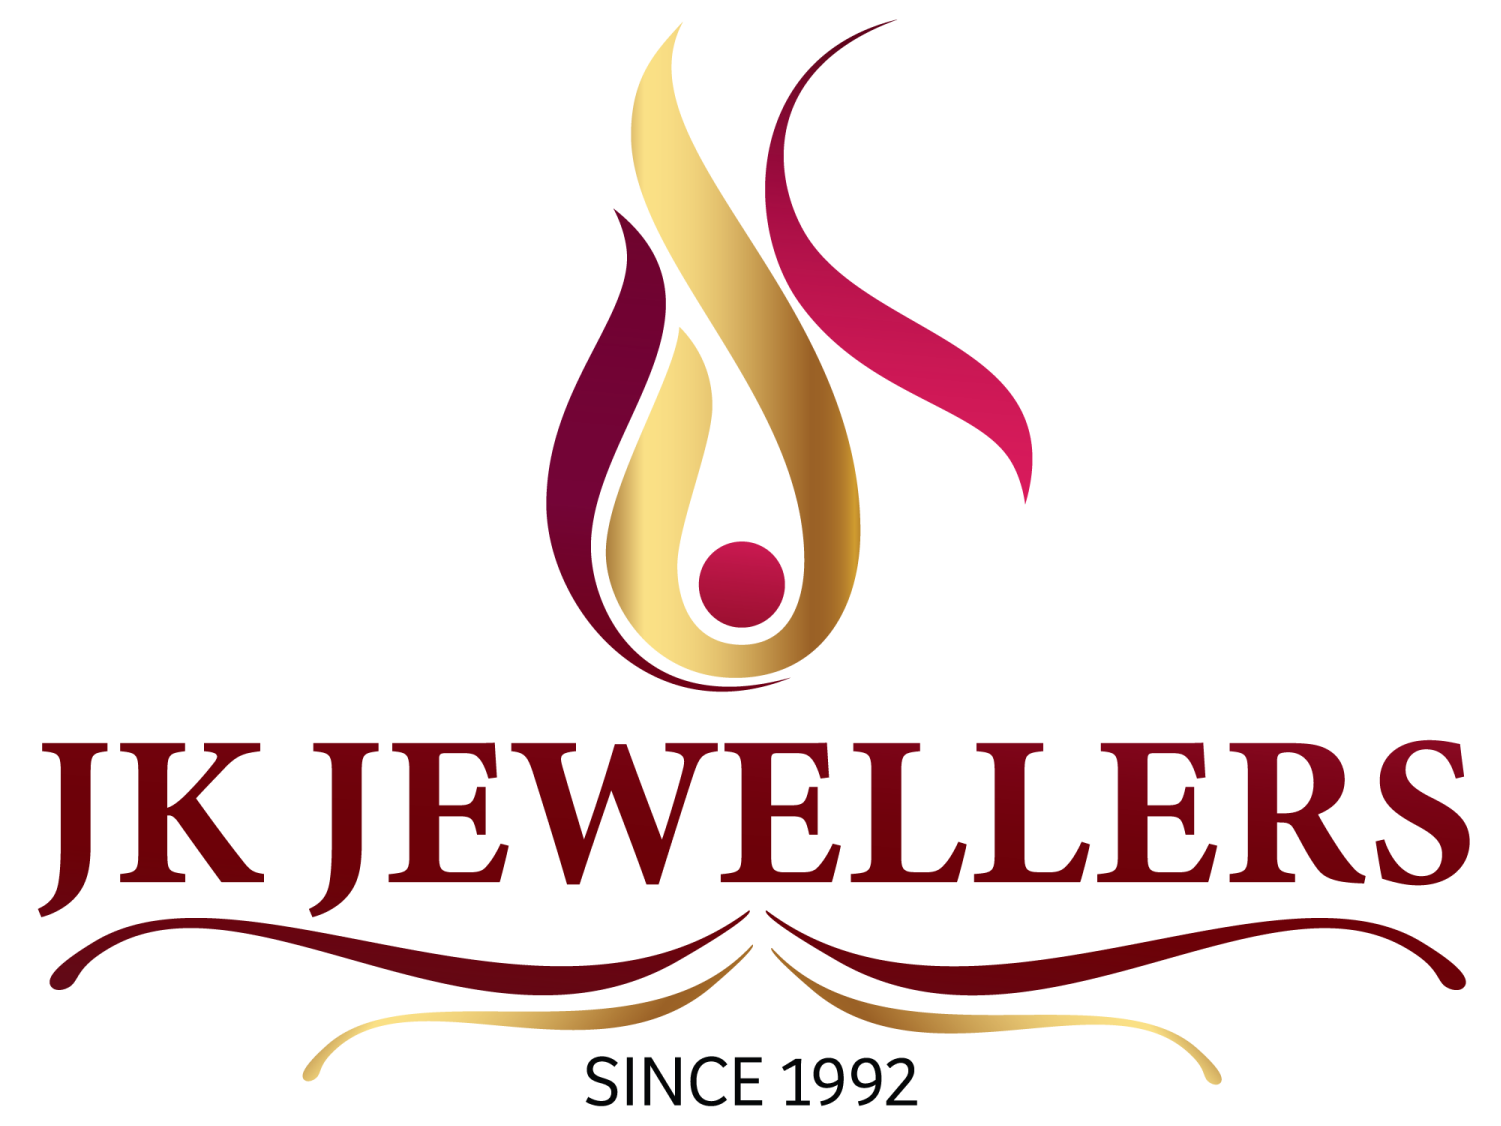 J K Jewellers